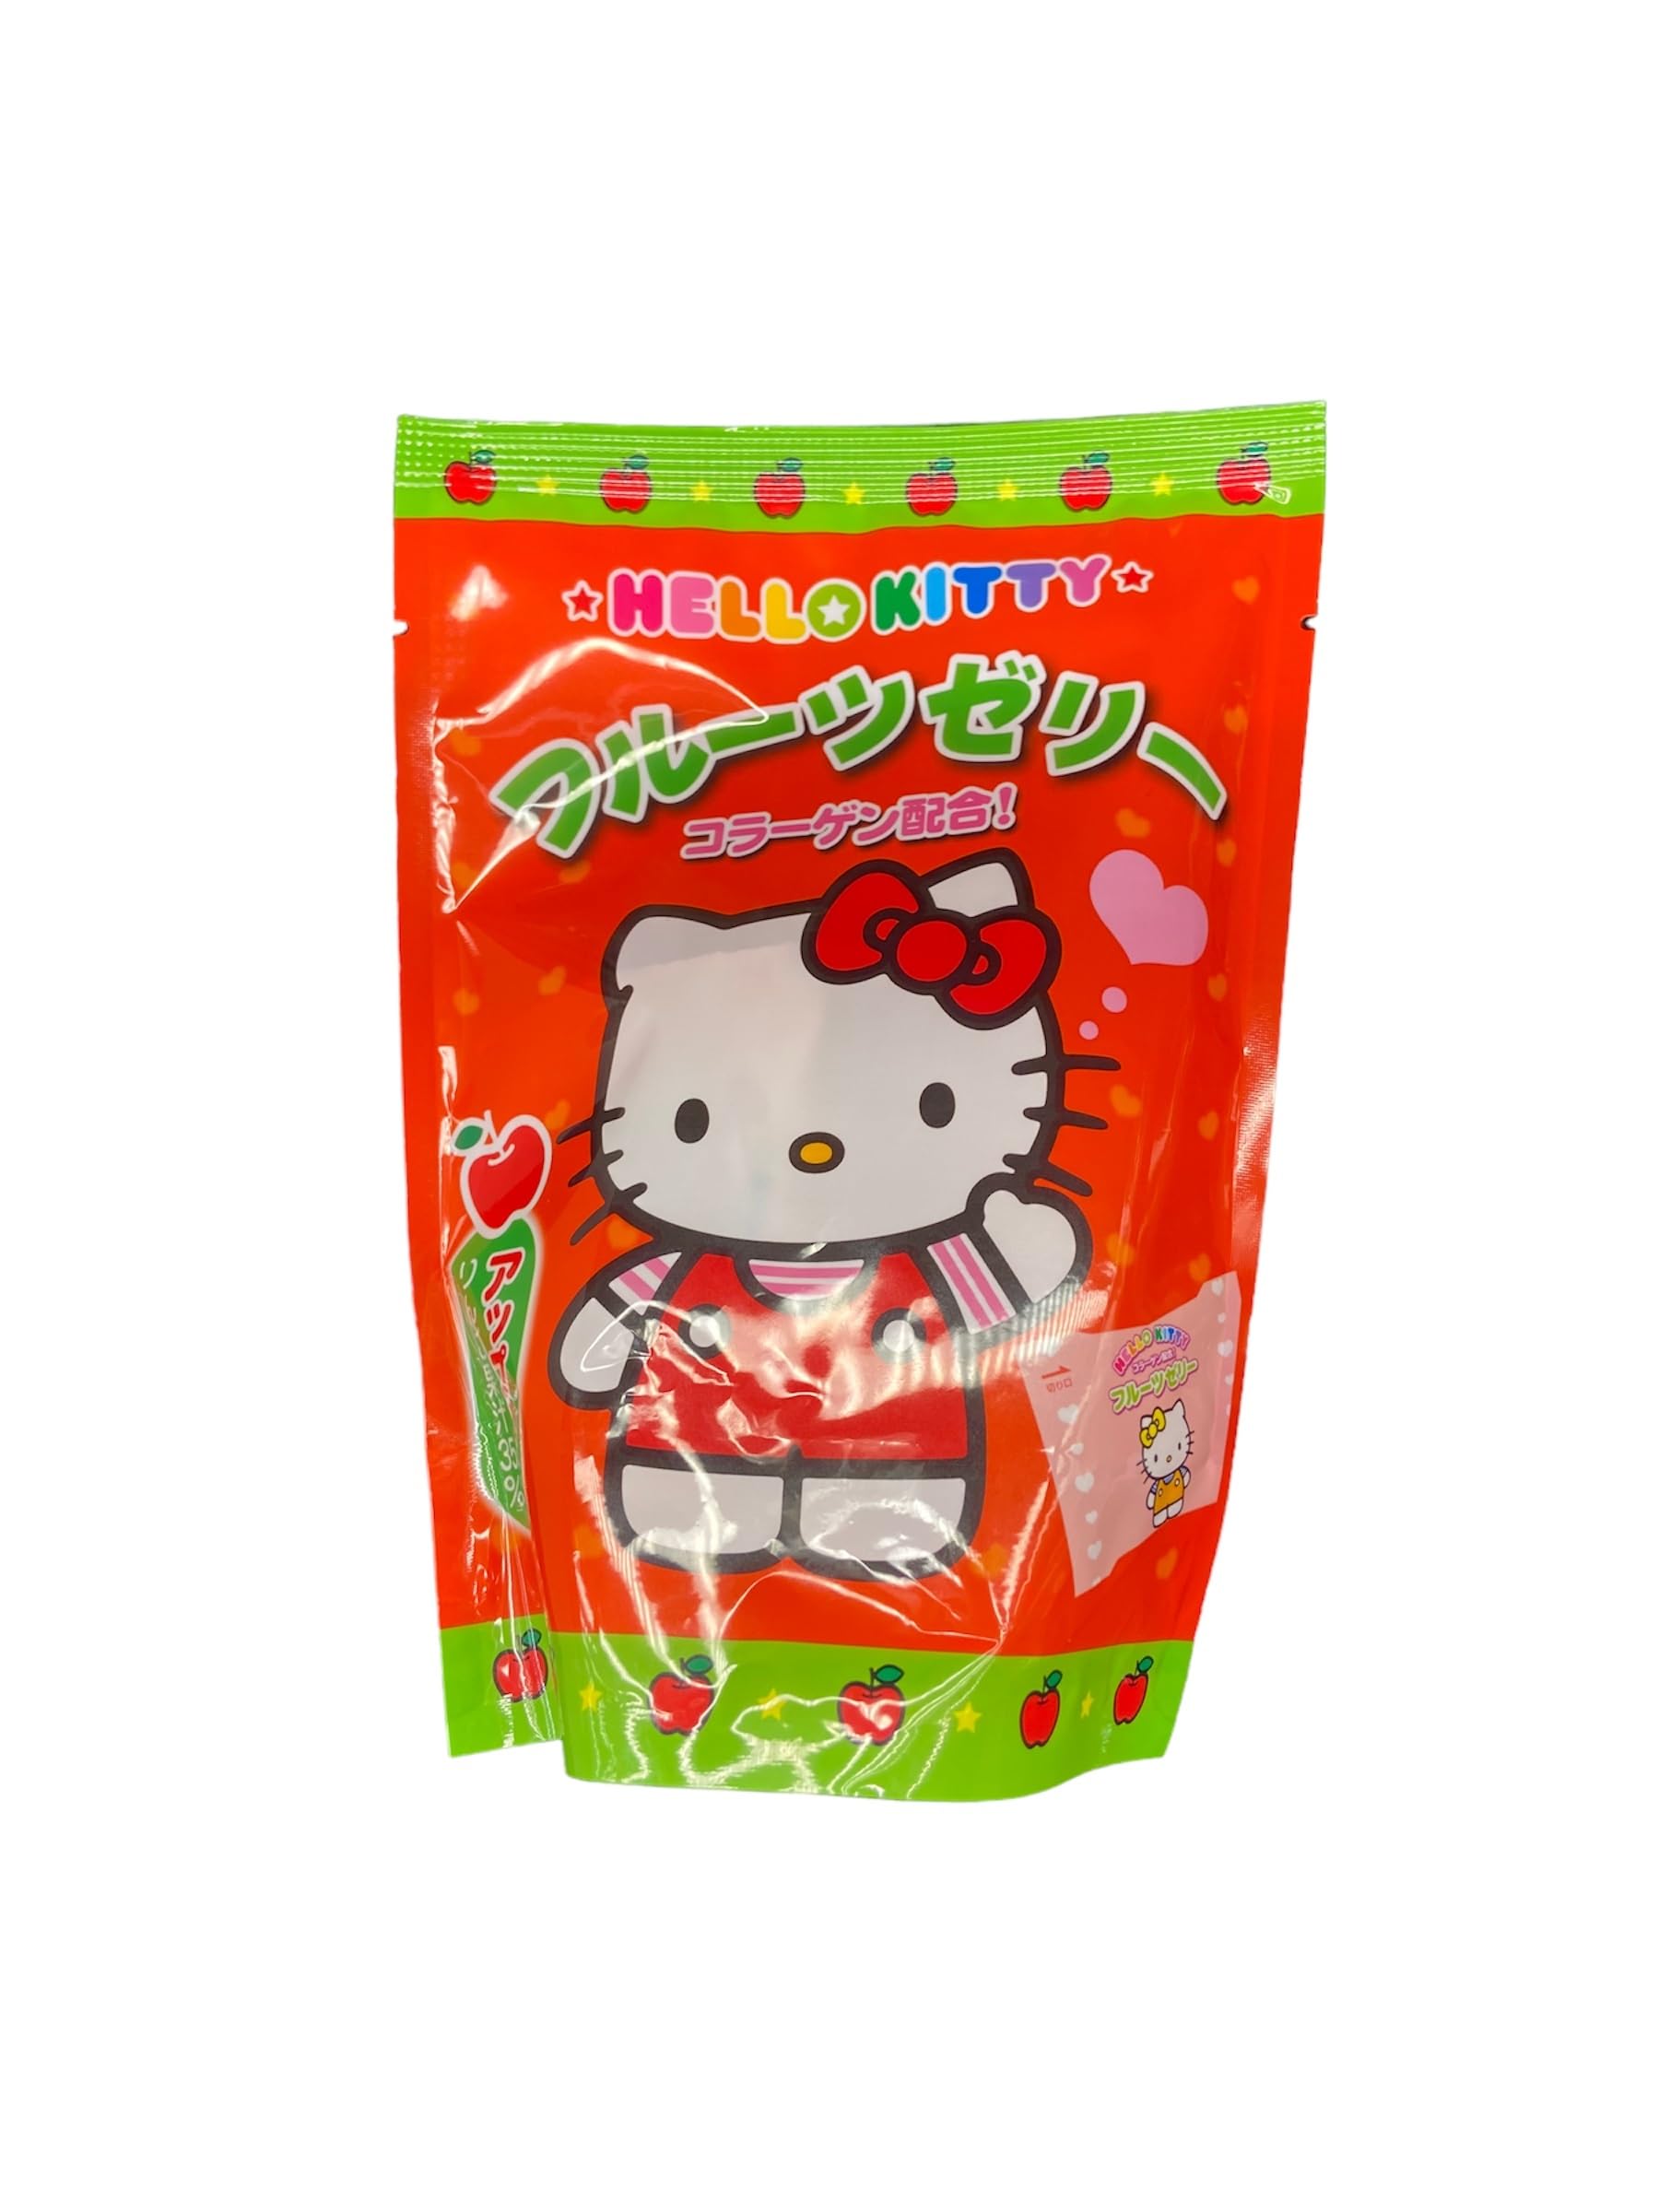 Naniwa Seika Hello Kitty Sweet Kawaii Dessert Snack Fruit Jelly Apple – 4.58 Oz (pack of 1)